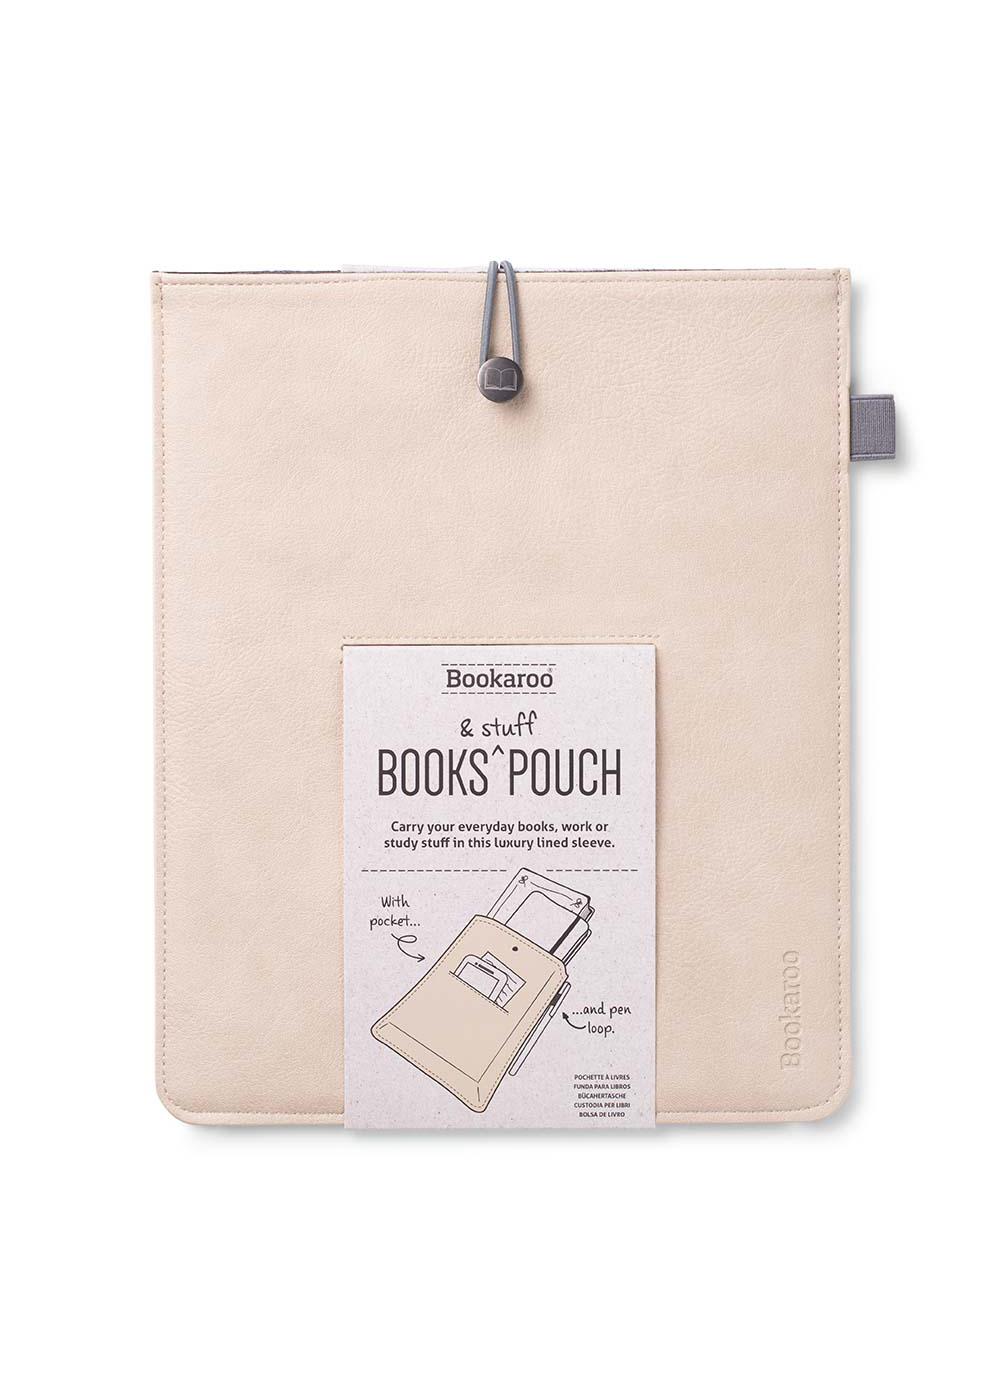 Bookaroo Books & Stuff Pouch - Cream; image 1 of 6